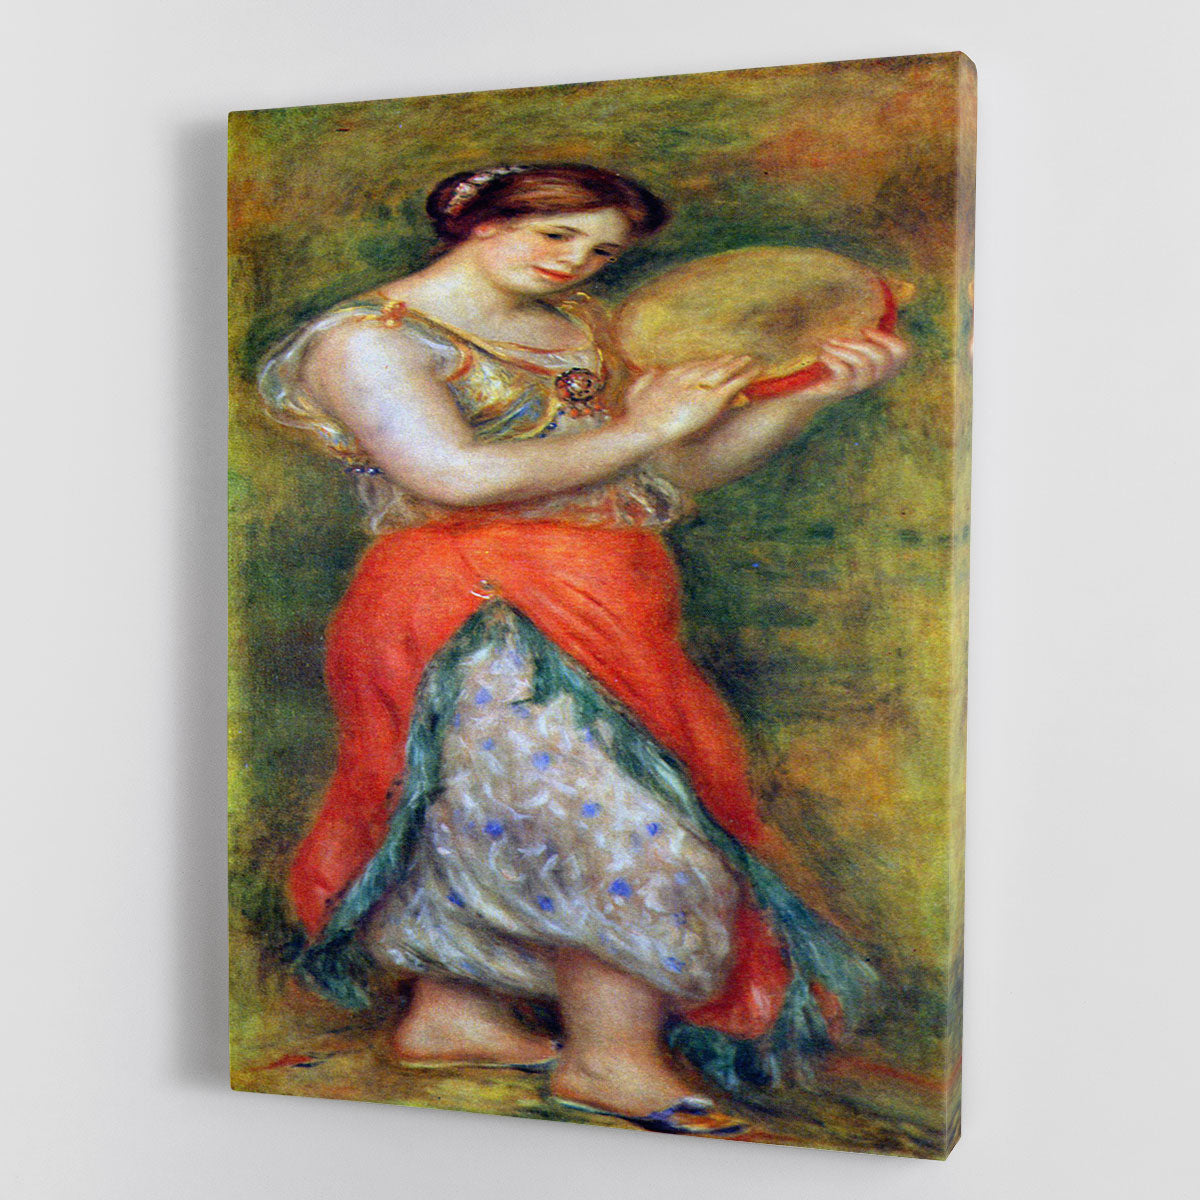 Dancer with tamborine by Renoir Canvas Print or Poster - Canvas Art Rocks - 1